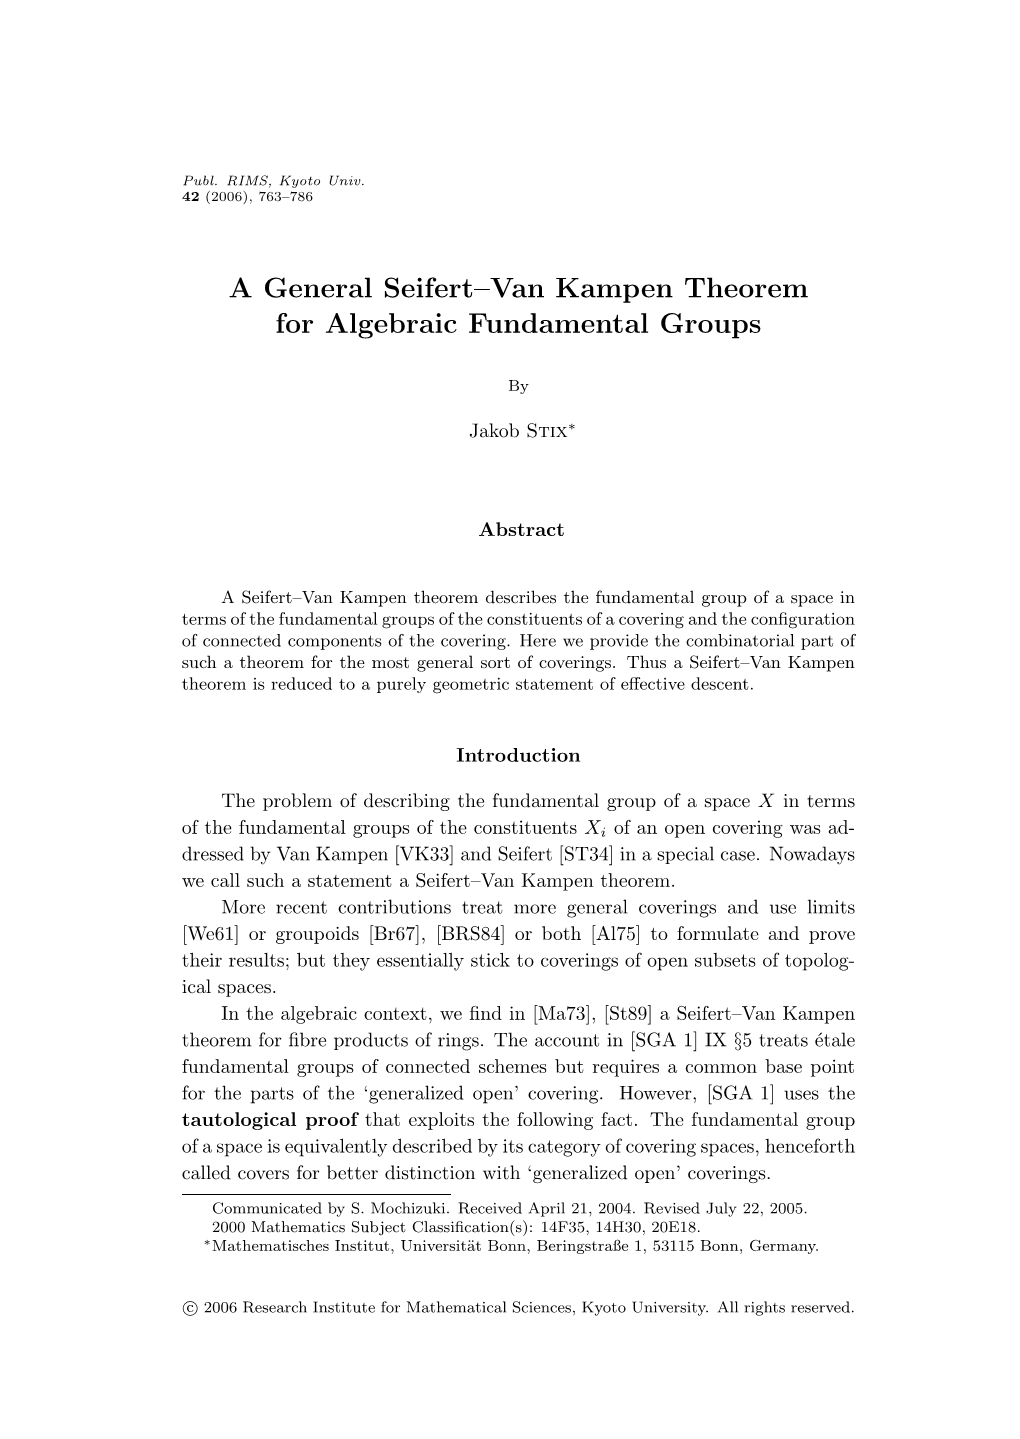 A General Seifert–Van Kampen Theorem for Algebraic Fundamental Groups